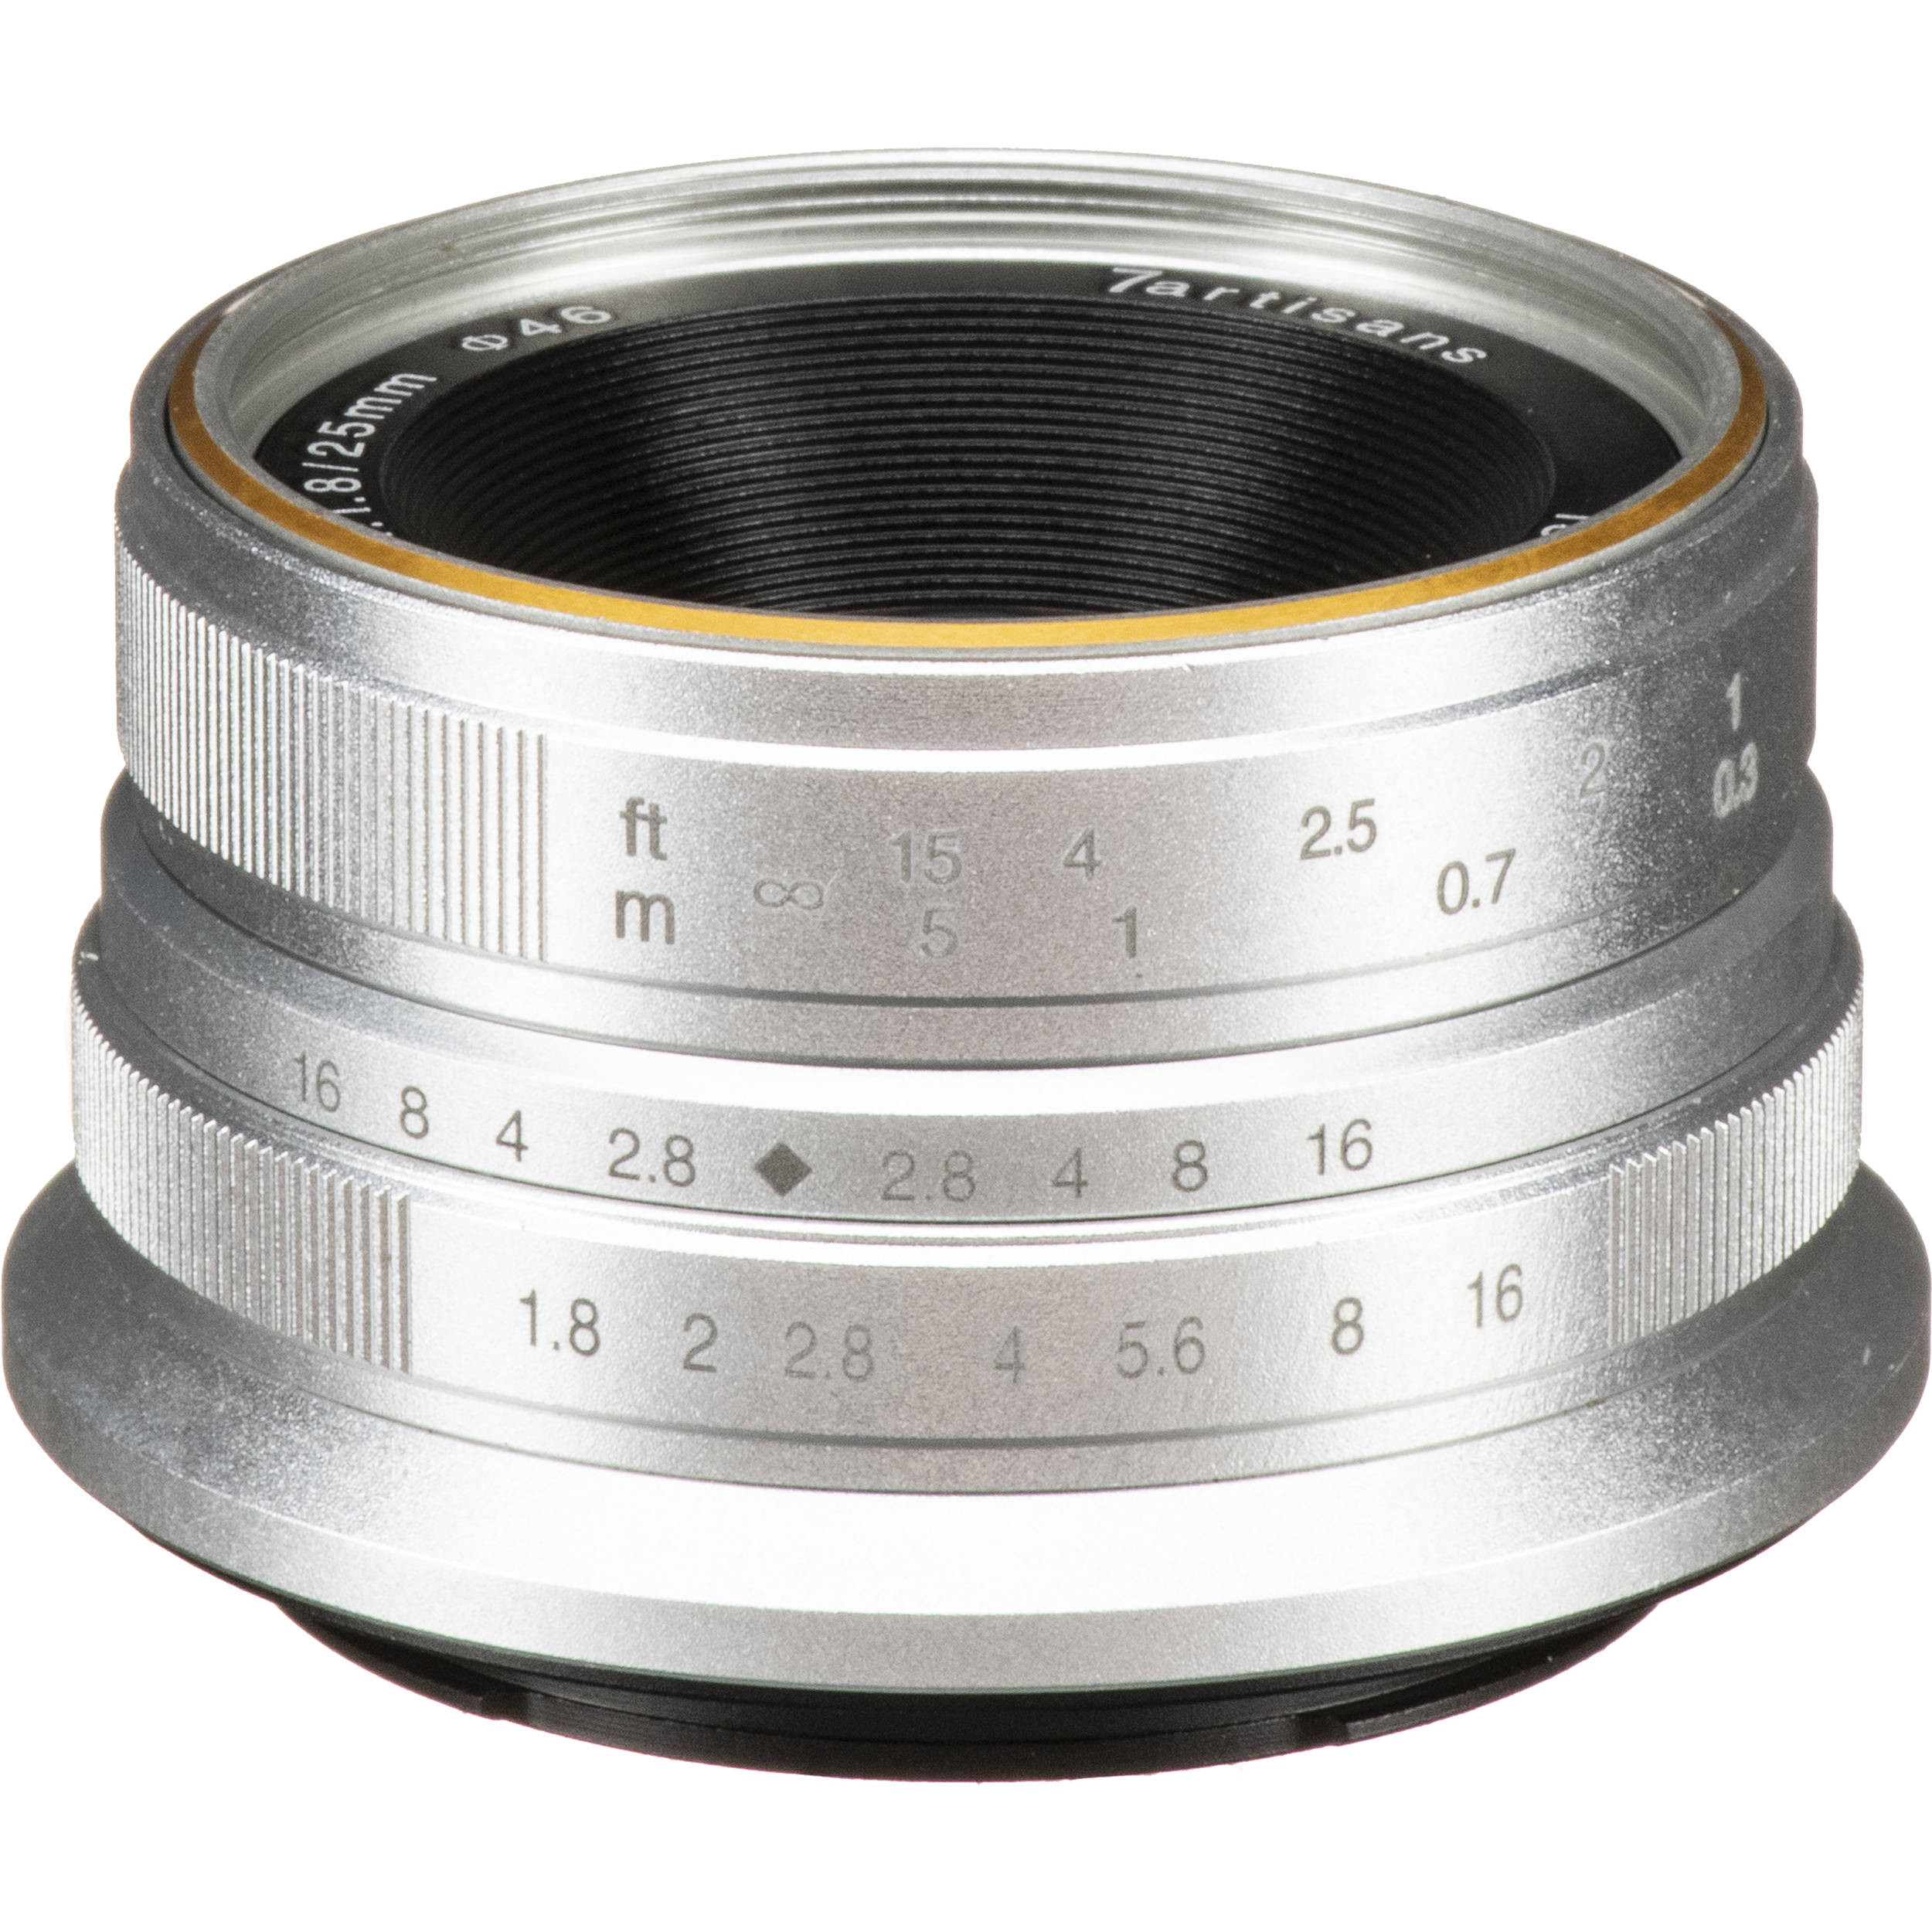 7Artisans 25mm f/1.8 Manual Focus Lens (Sony E) Silver